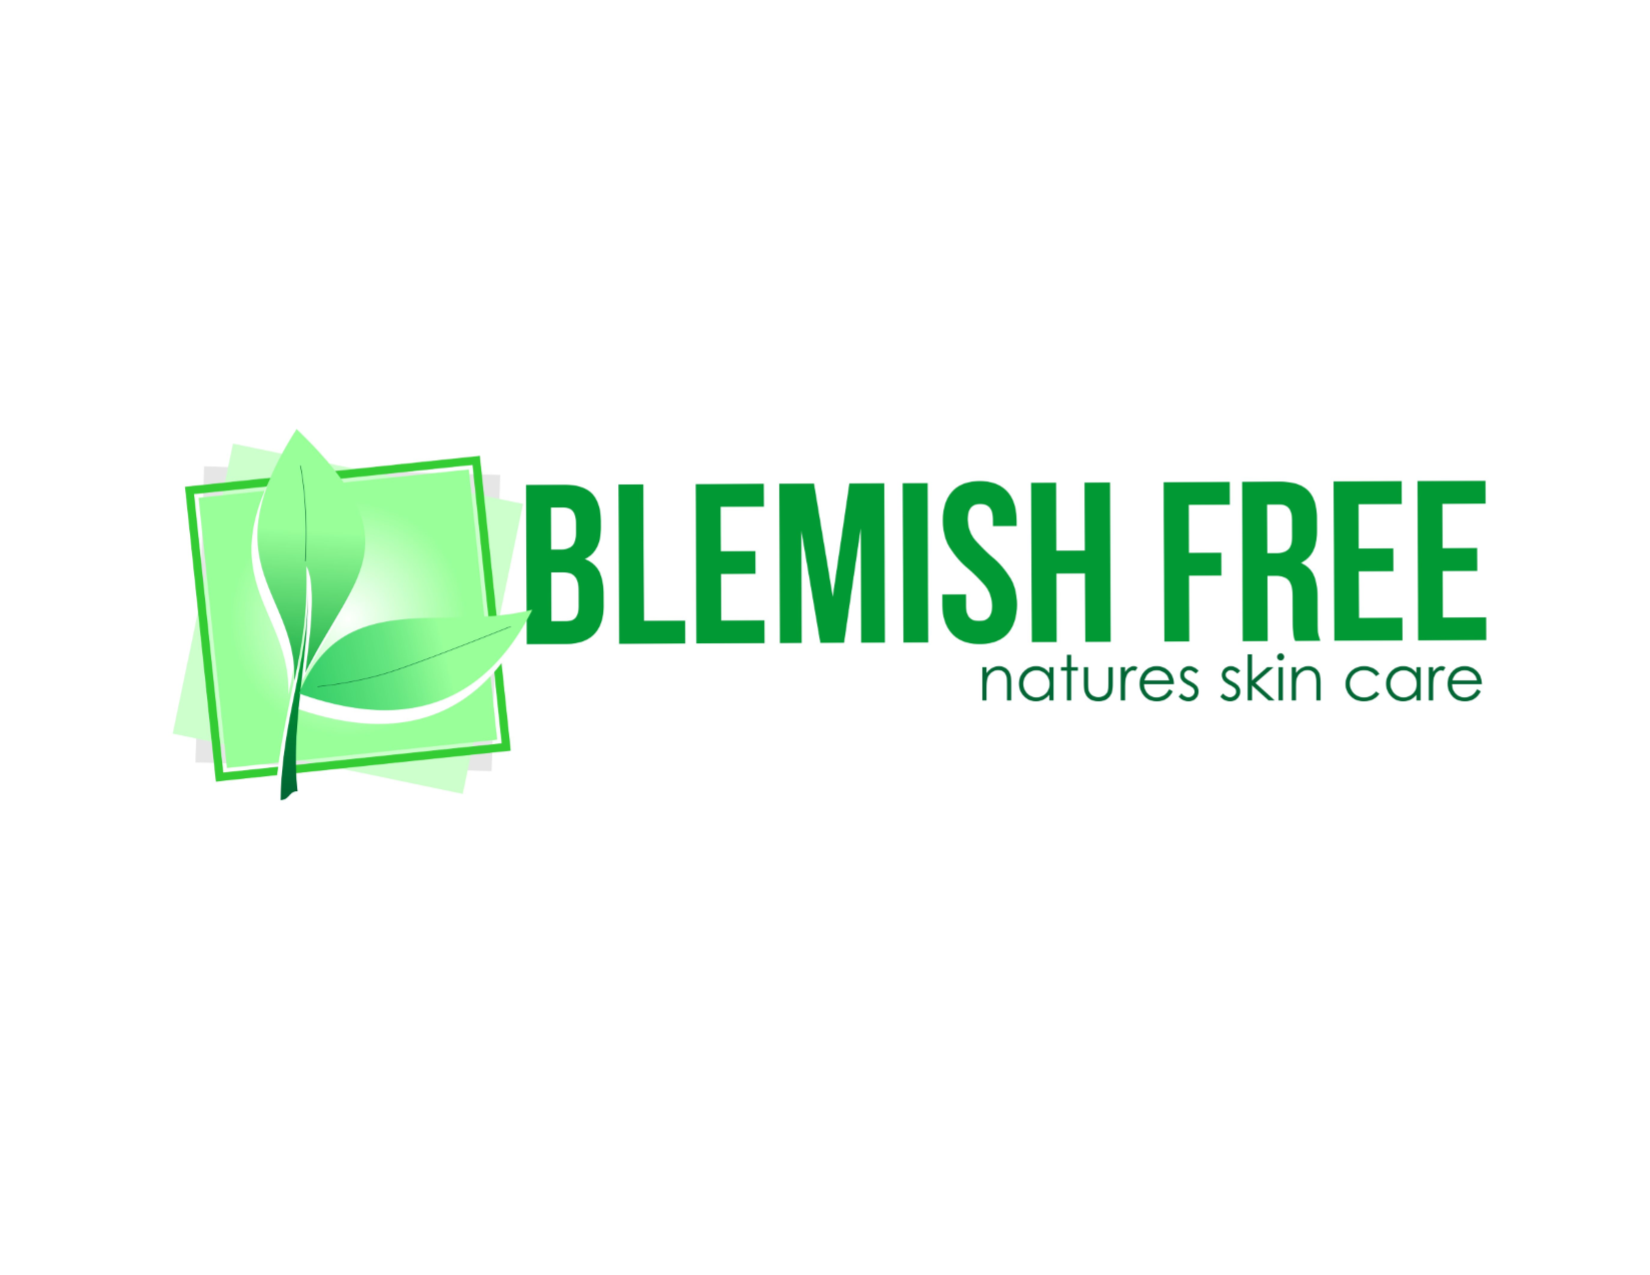 BLEMISH FREE NATURES SKIN CARE